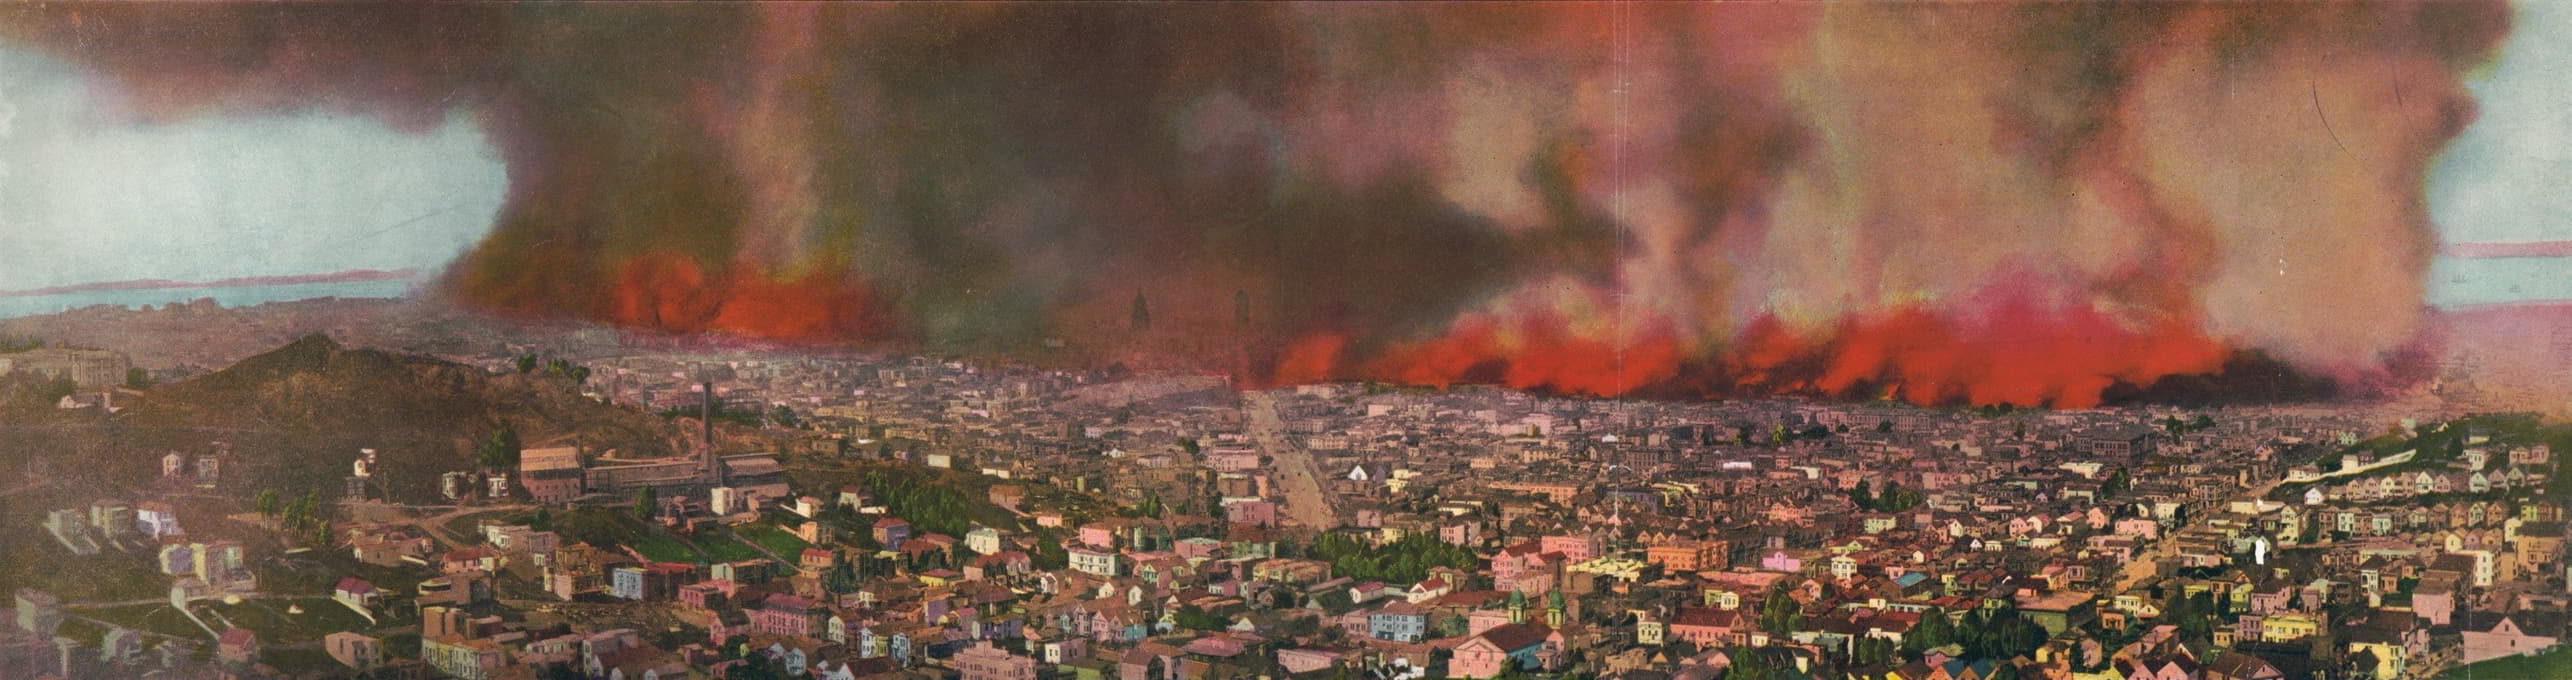 Harry Sterling Hooper - The burning of San Francisco